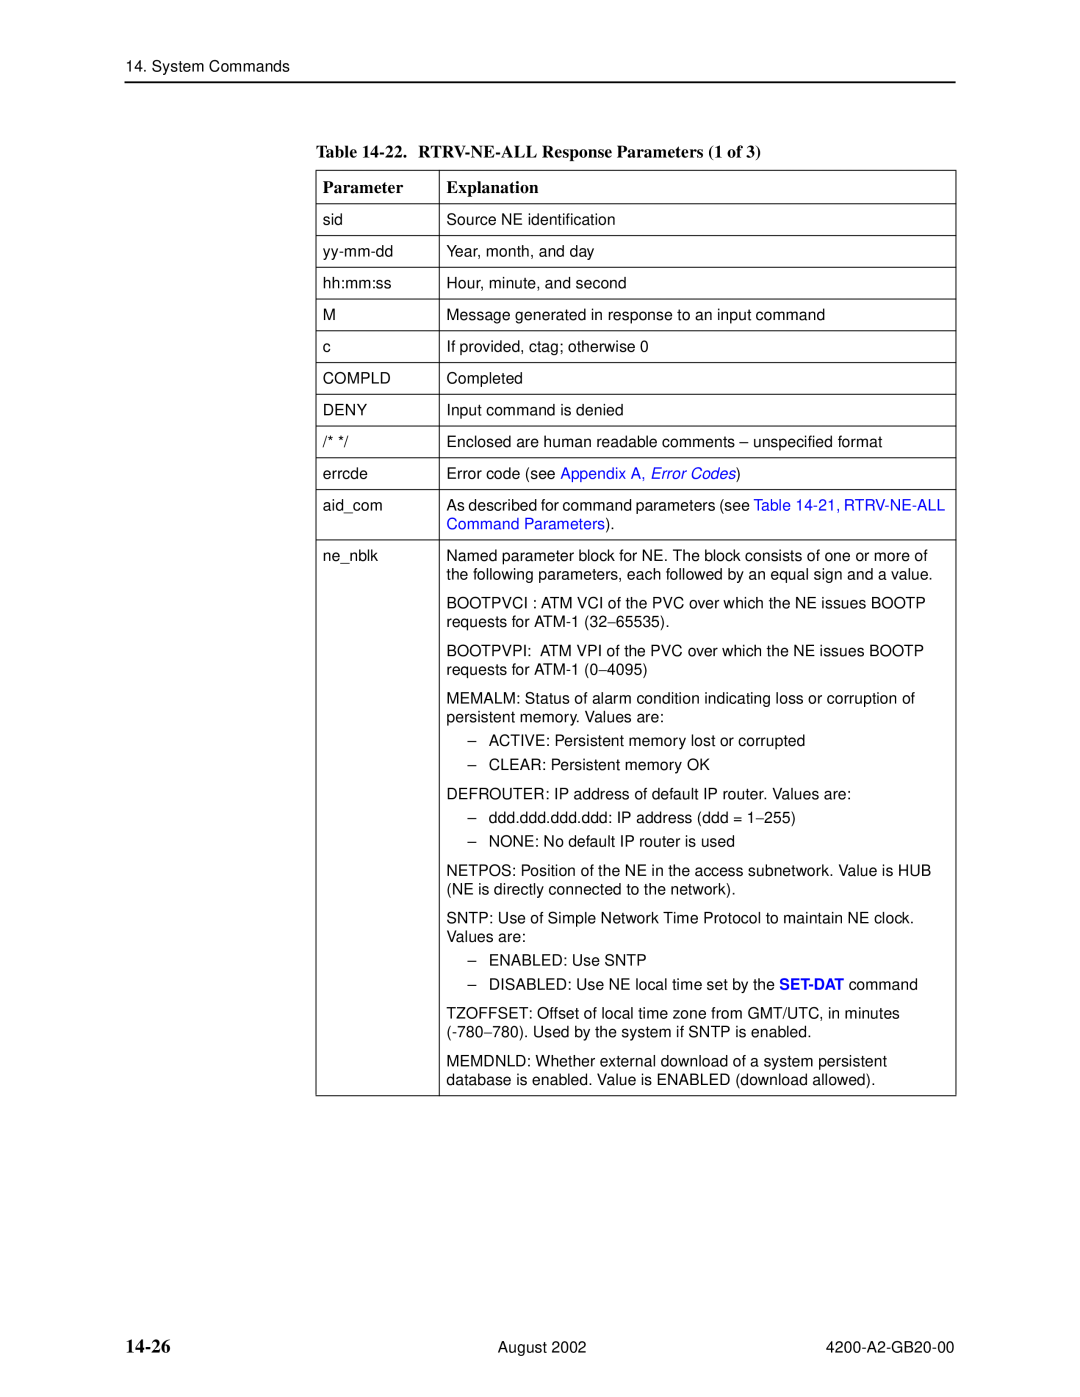 Paradyne 4200 manual 14-26, 22. RTRV-NE-ALL Response Parameters 1 of, Explanation, Command Parameters 